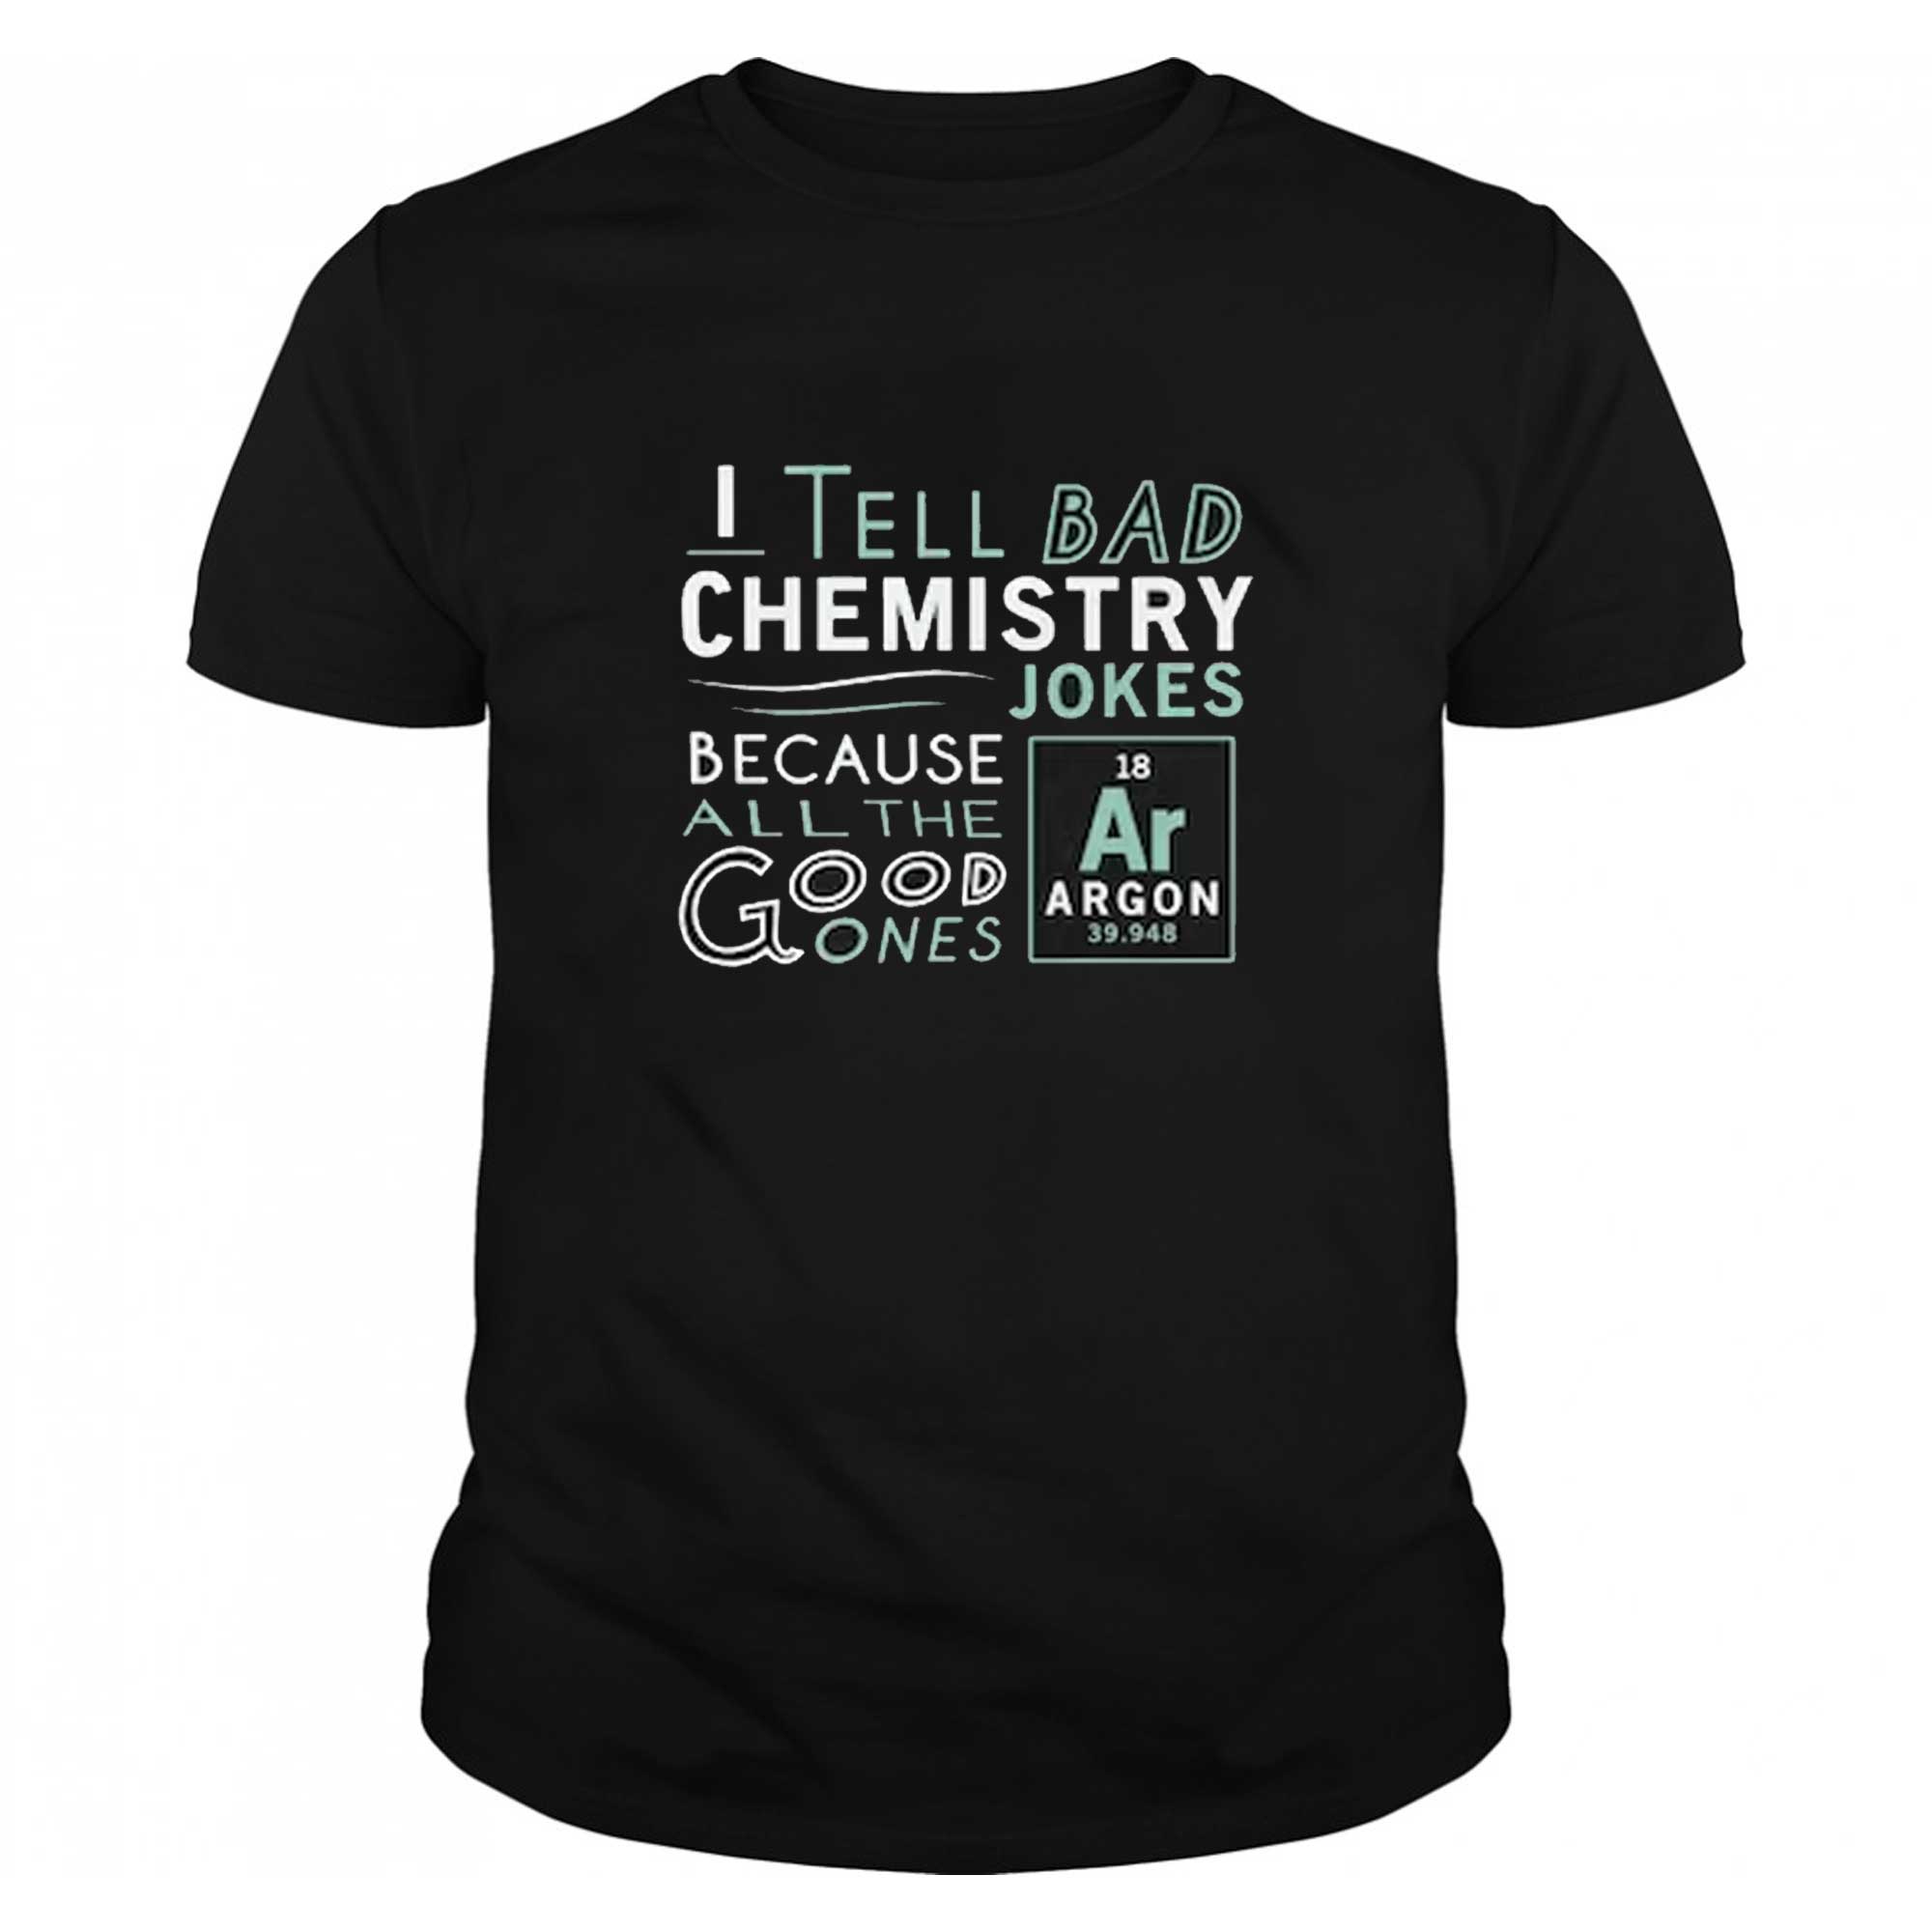 Skitongift-Funny-Science-T-Shirt-Argon-Chemistry-Joke-T-Shirt-Funny-Chemistry-Tshirts-Math-Science-And-Chemistry-Jokes-Tshirts-Funny-Shirts-Long-Sleeve-Tee